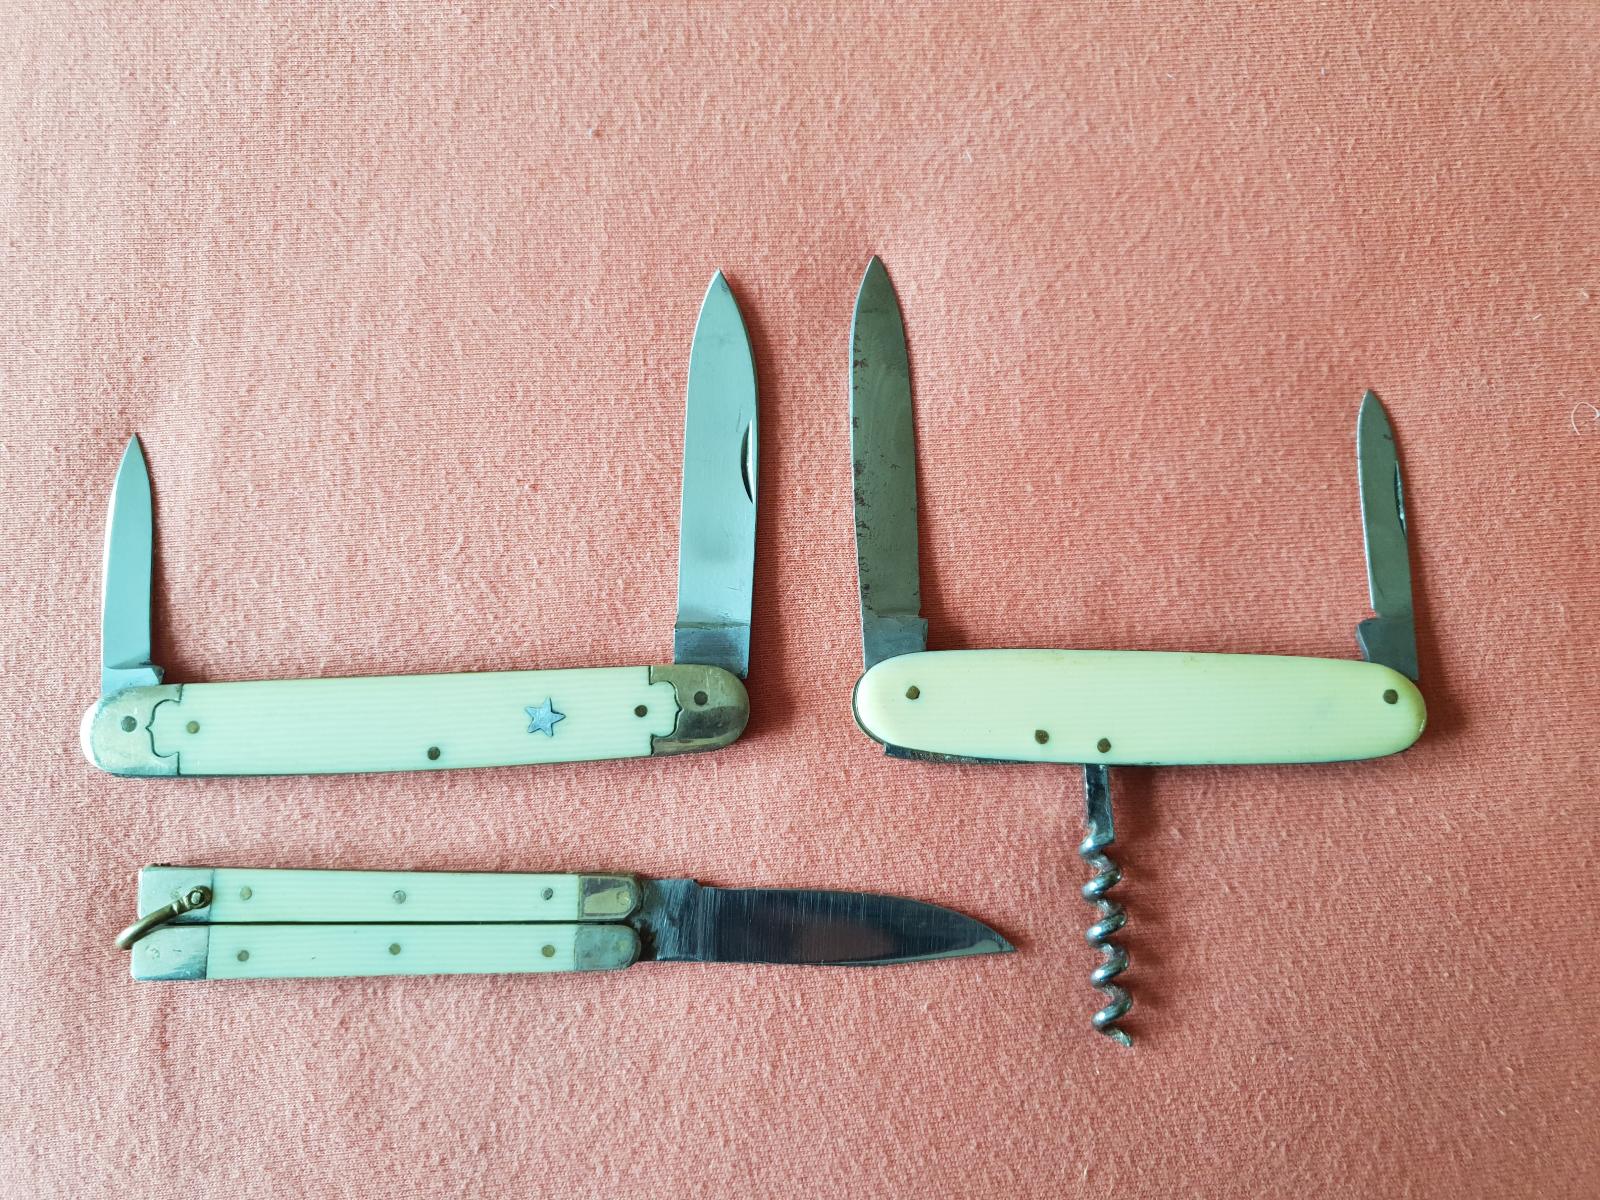 Tri nože zo skladu SOLINGEN-Britské mandátne územie Izrael 1940, RRR - Vojenské zberateľské predmety